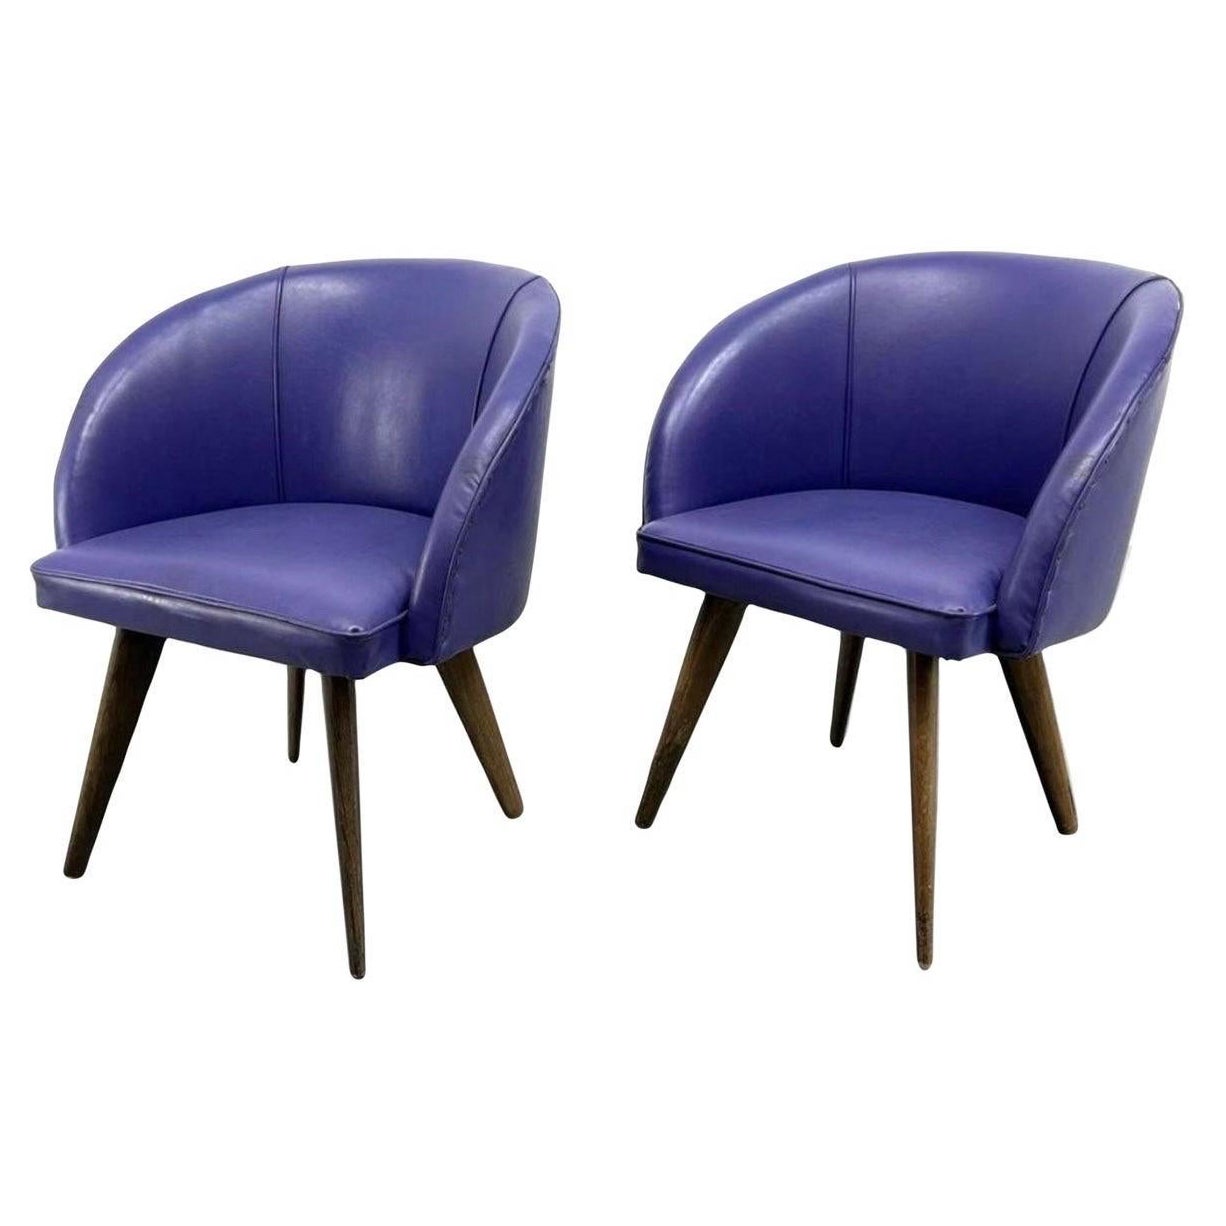 Danish Modern Purple Upholstered Barrel Tub Chairs - a Pair